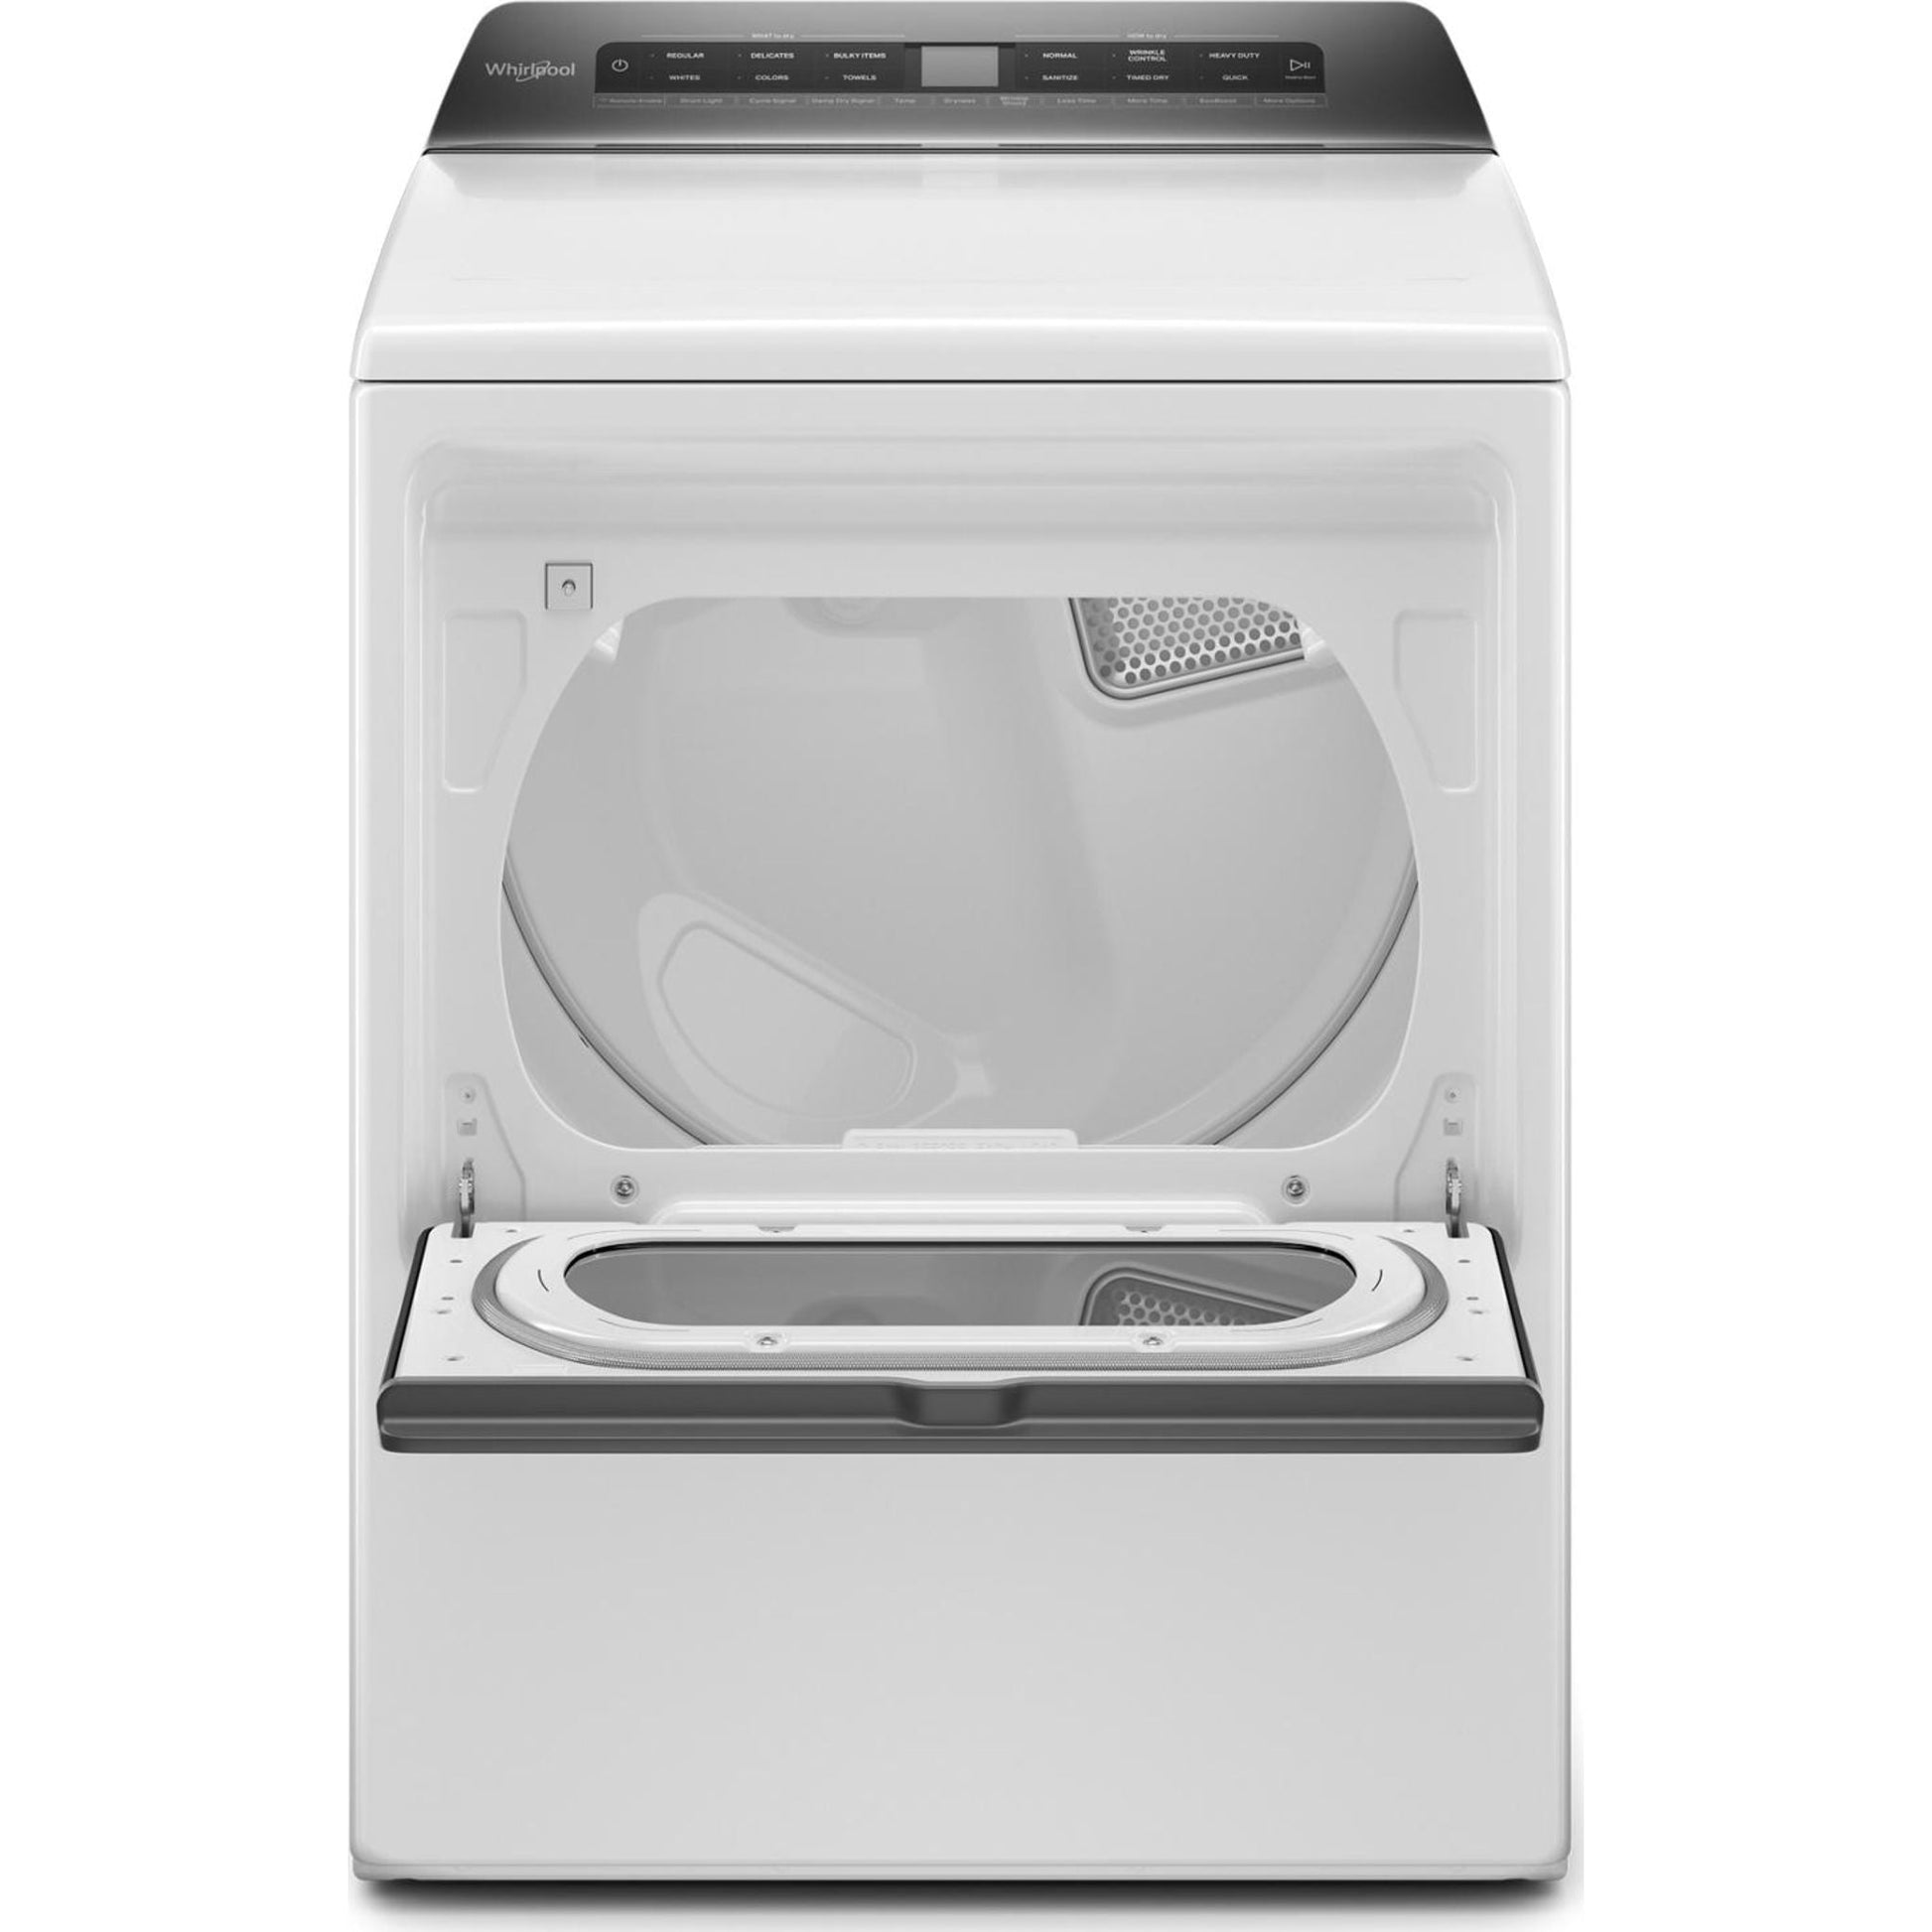 Whirlpool Dryer (YWED6120HW) - White